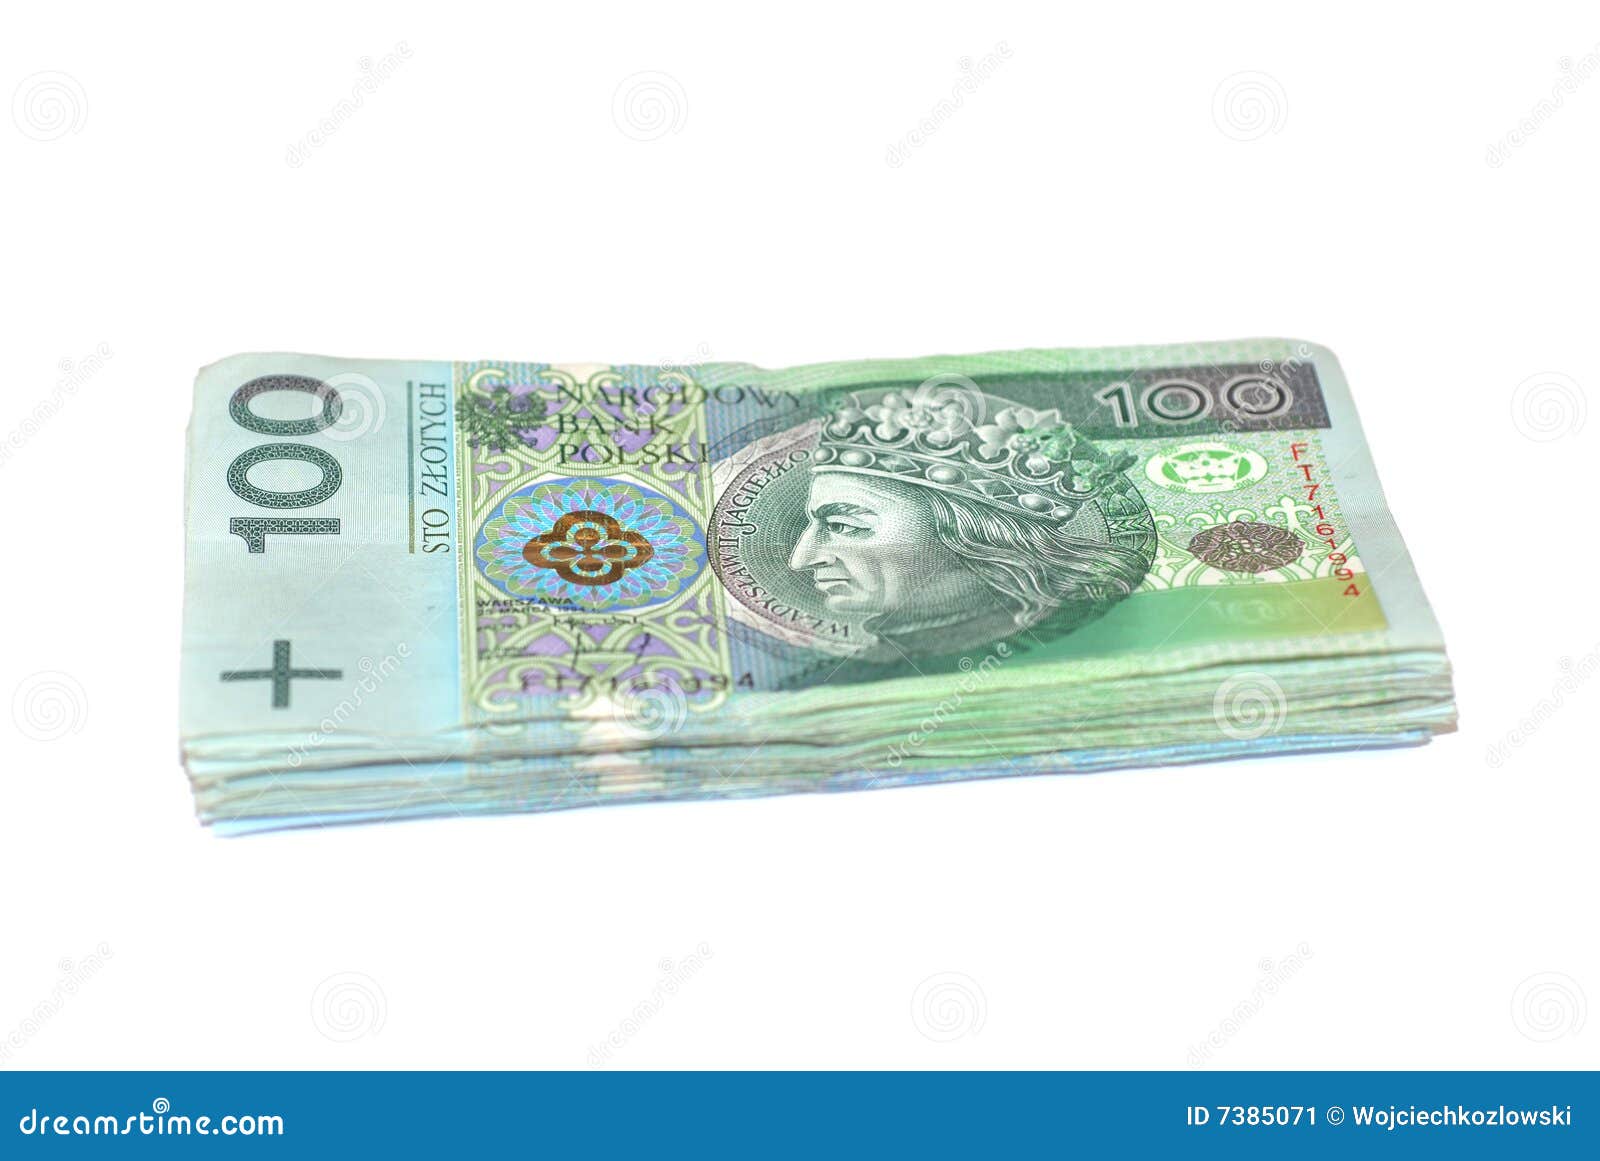 polish money 100 pln. poland